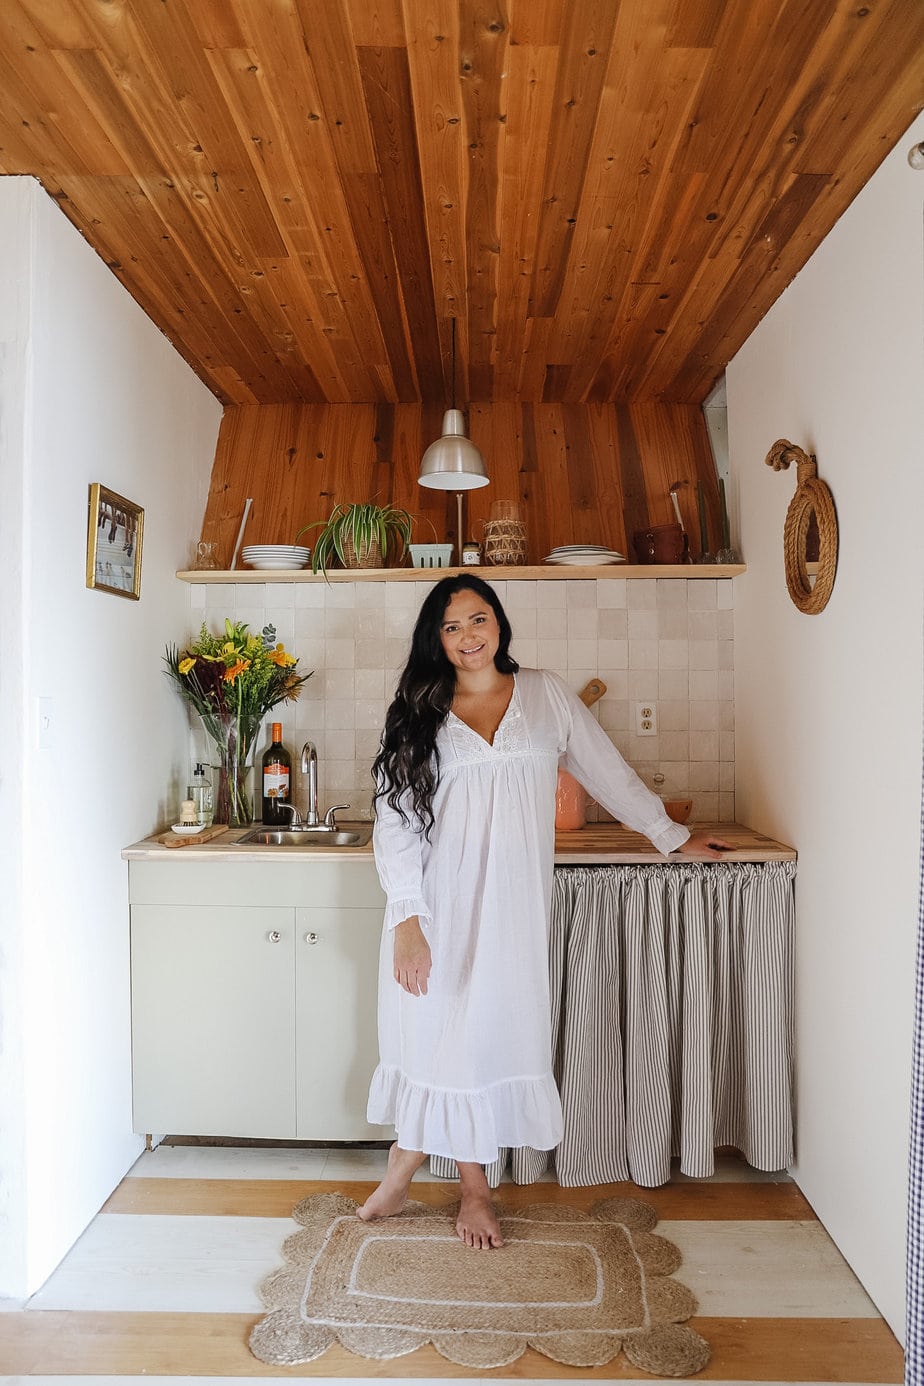 Small Cabin Kitchen Ideas – Reveal!